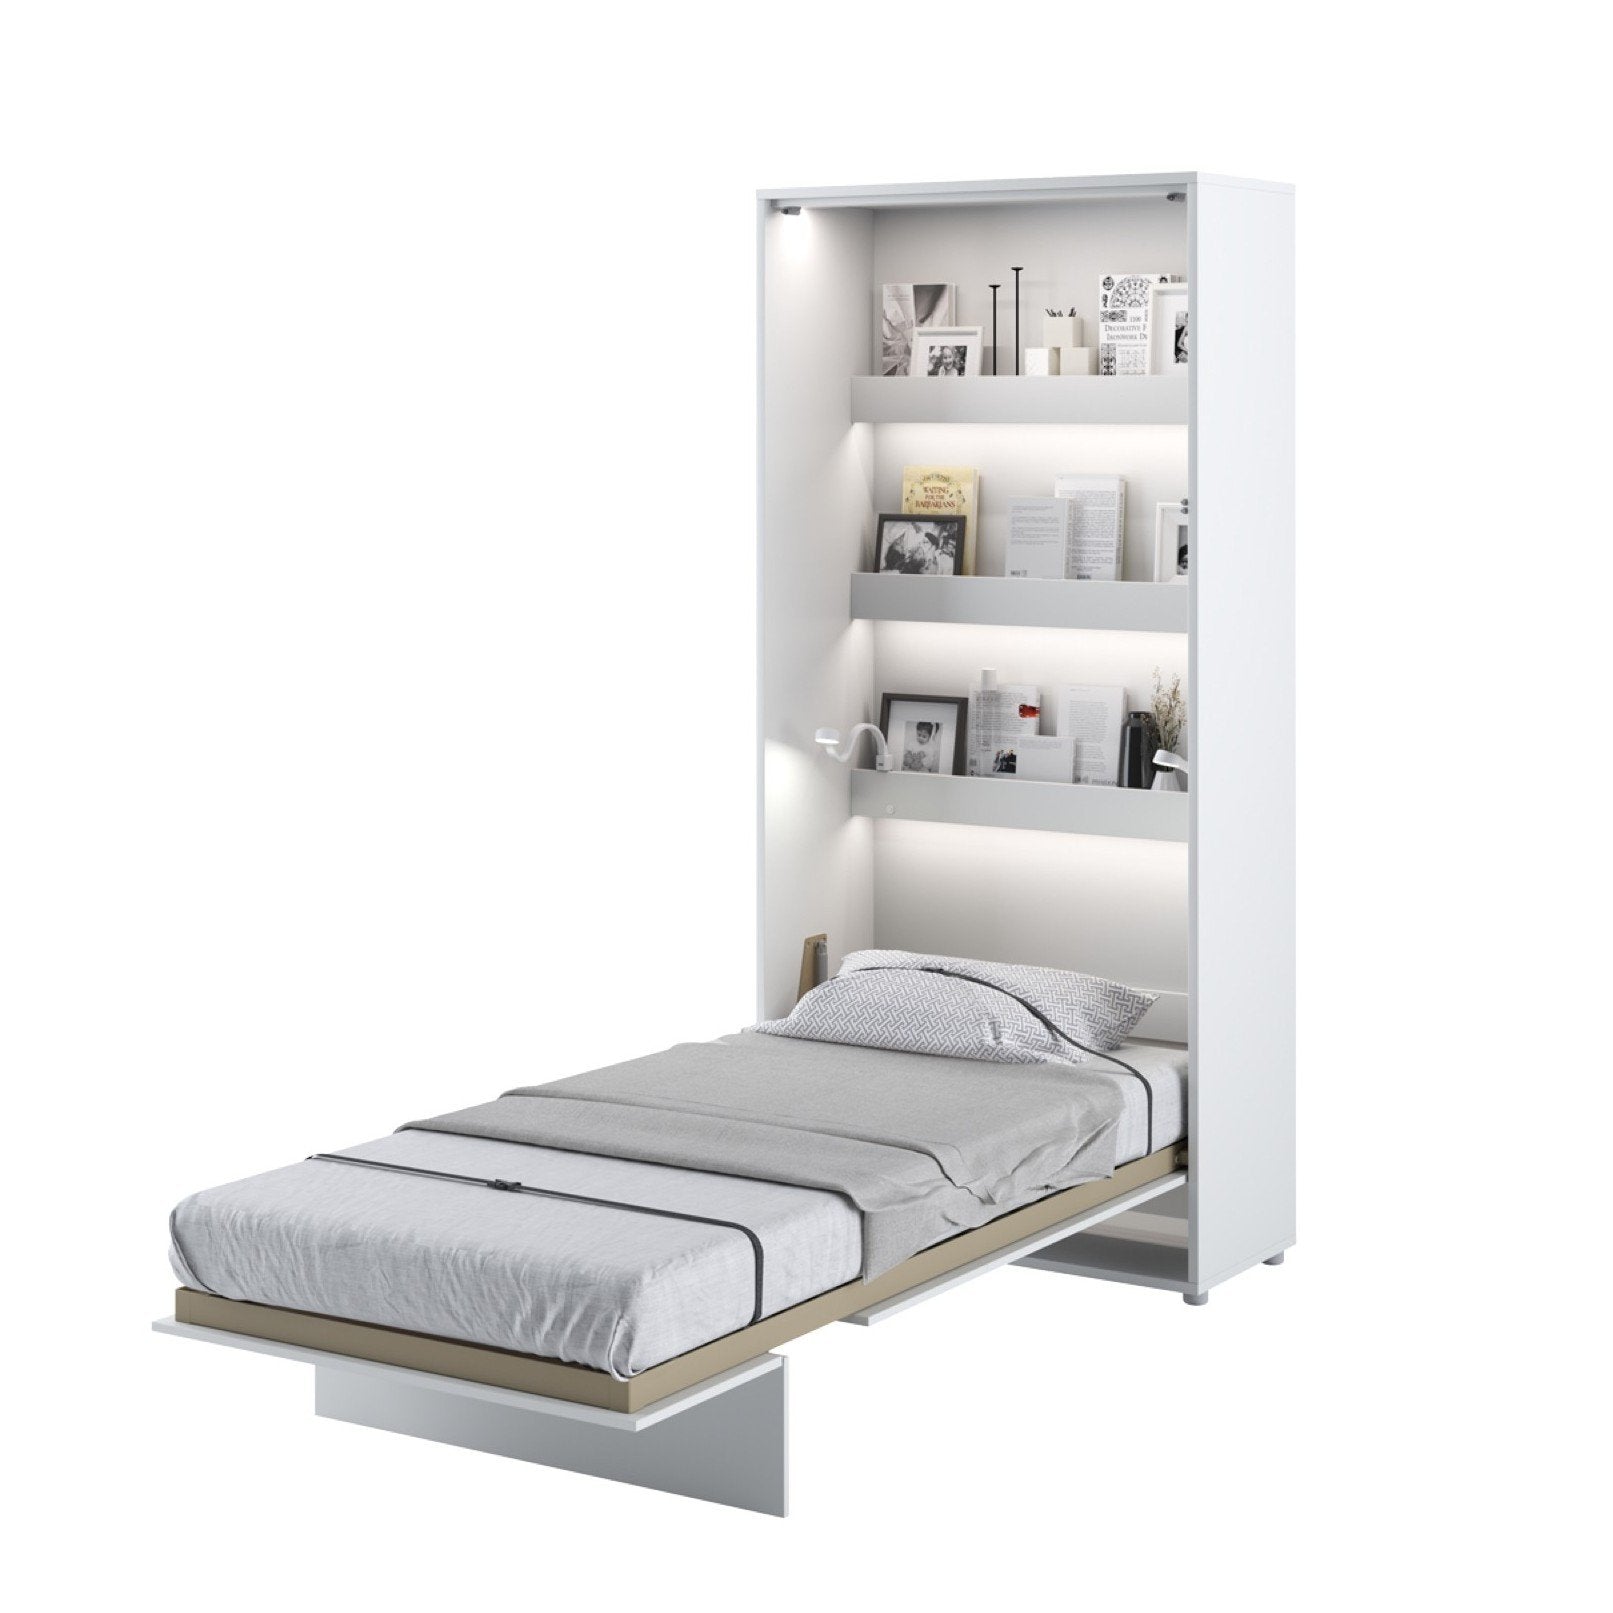 View BC03 Vertical Wall Bed Concept 90cm Murphy Bed White Matt 90 x 200cm information